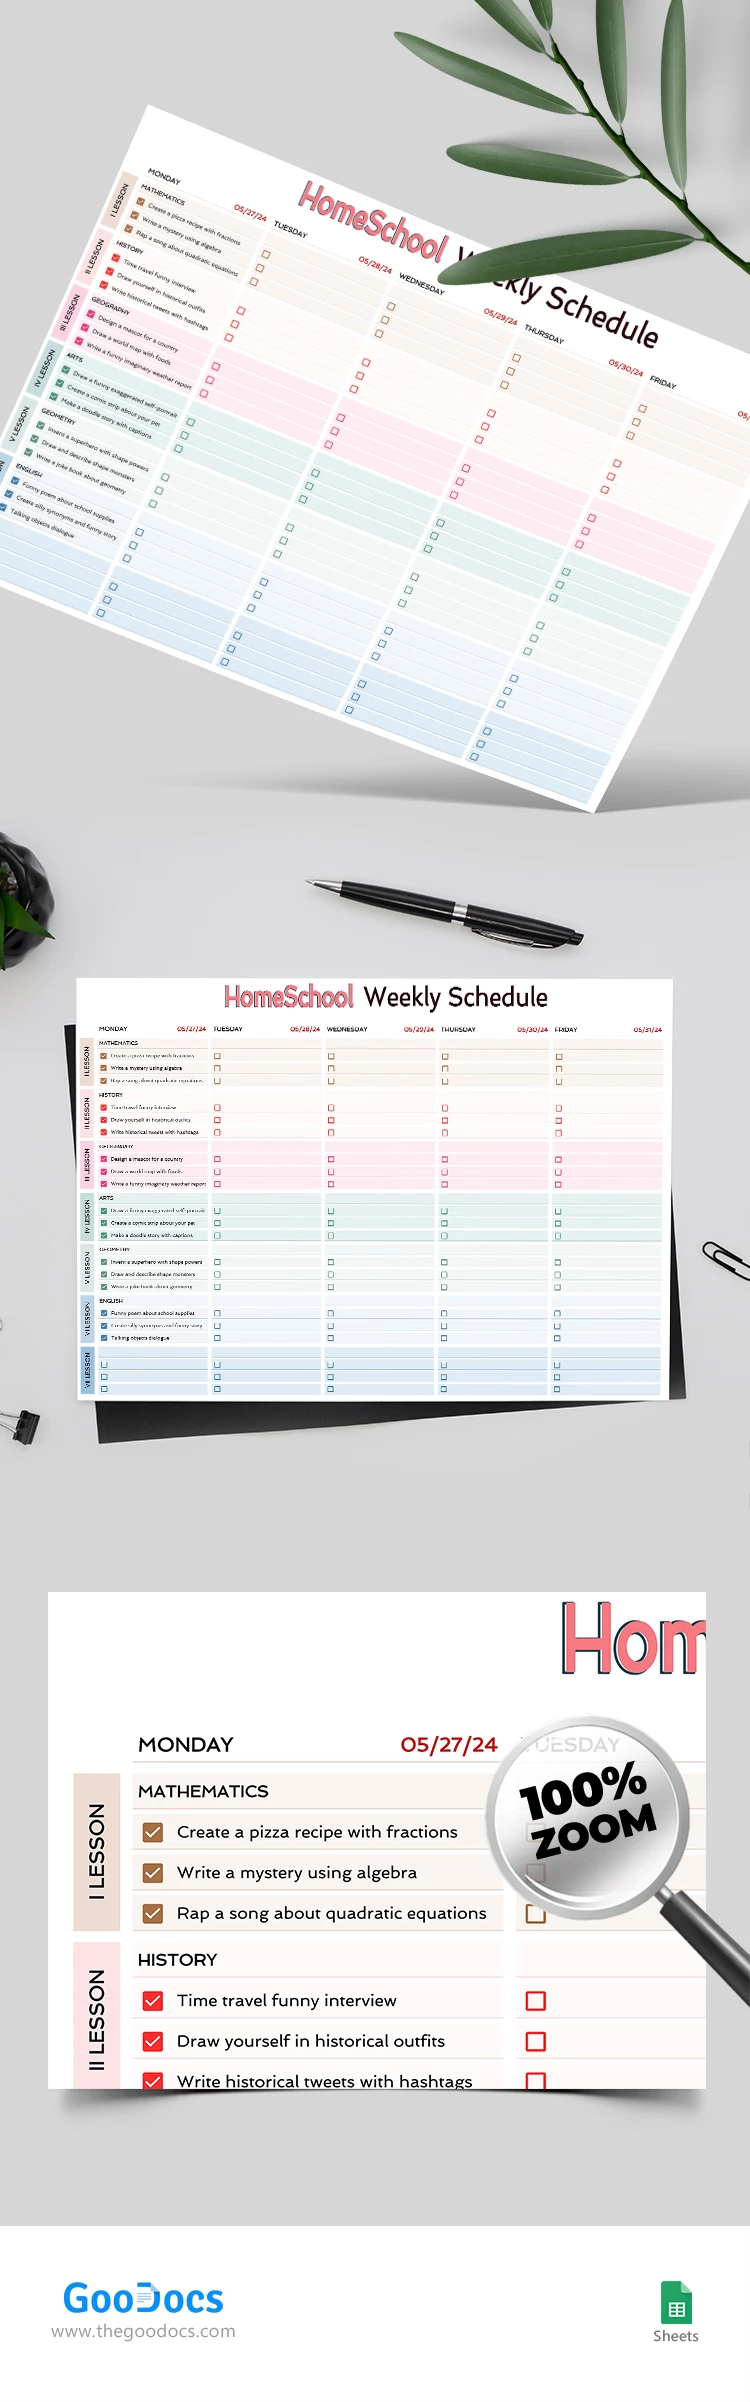 Homeschool Weekly Schedule - free Google Docs Template - 10068749